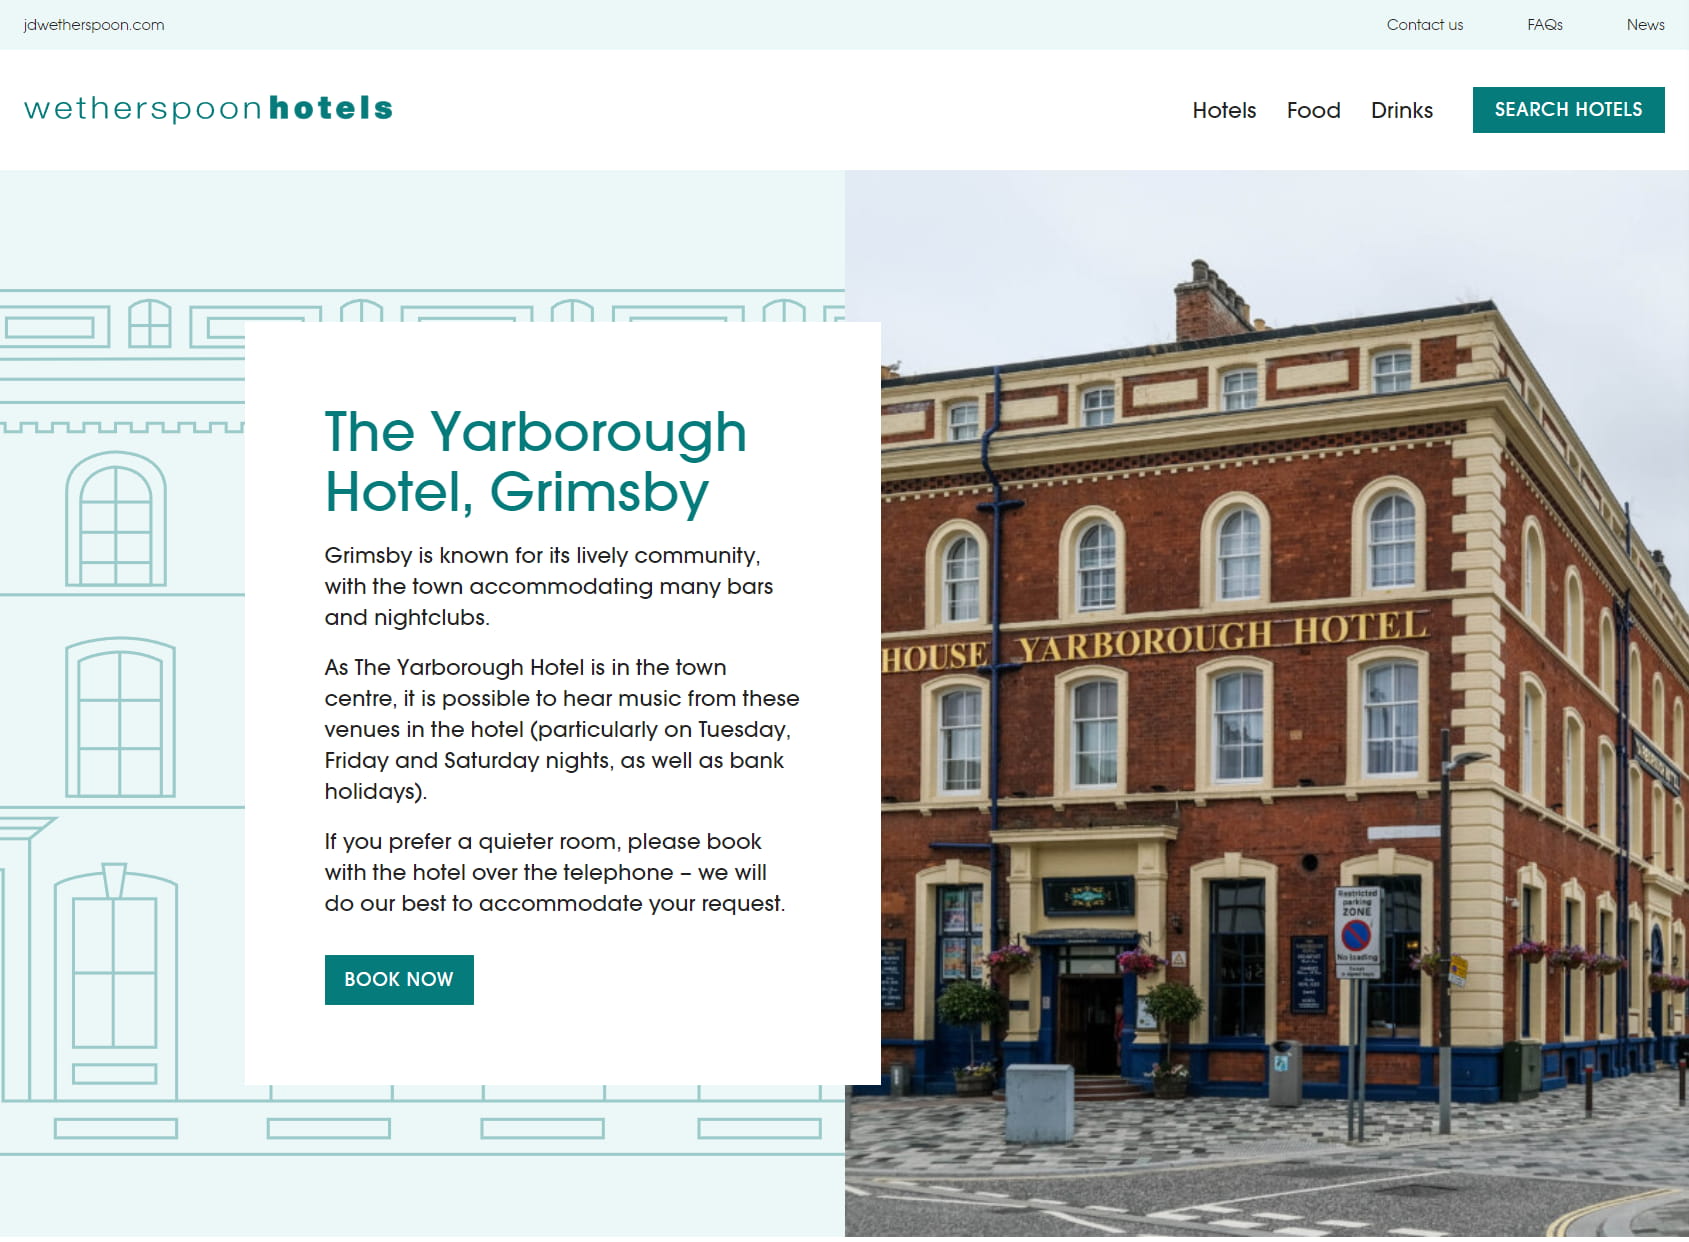 The Yarborough Hotel